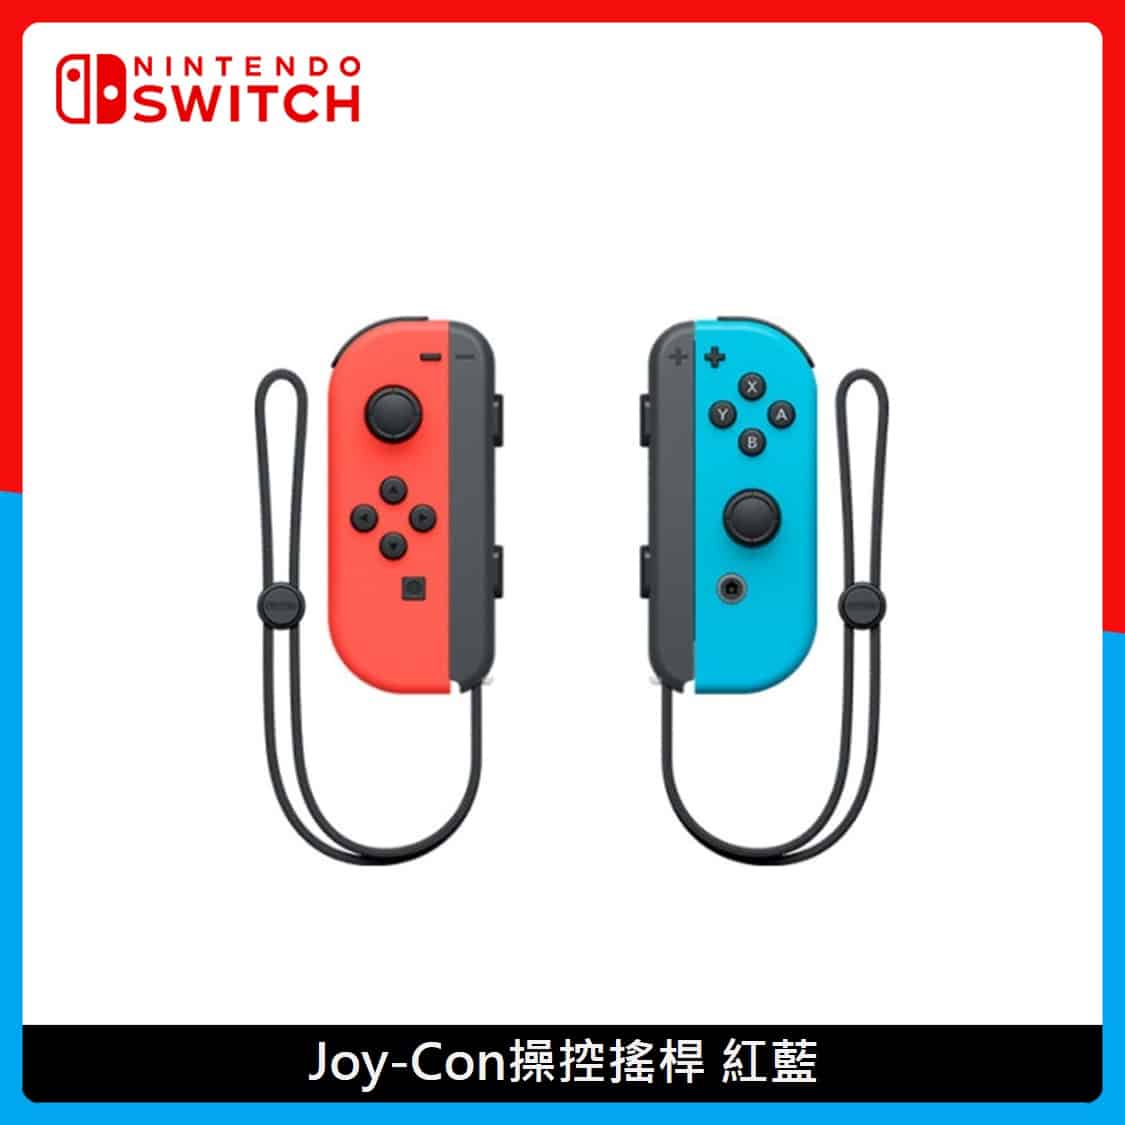 Nintendo 任天堂Switch OLED 紅藍主機Joy-Con搖桿組合(4色選) | 法雅客